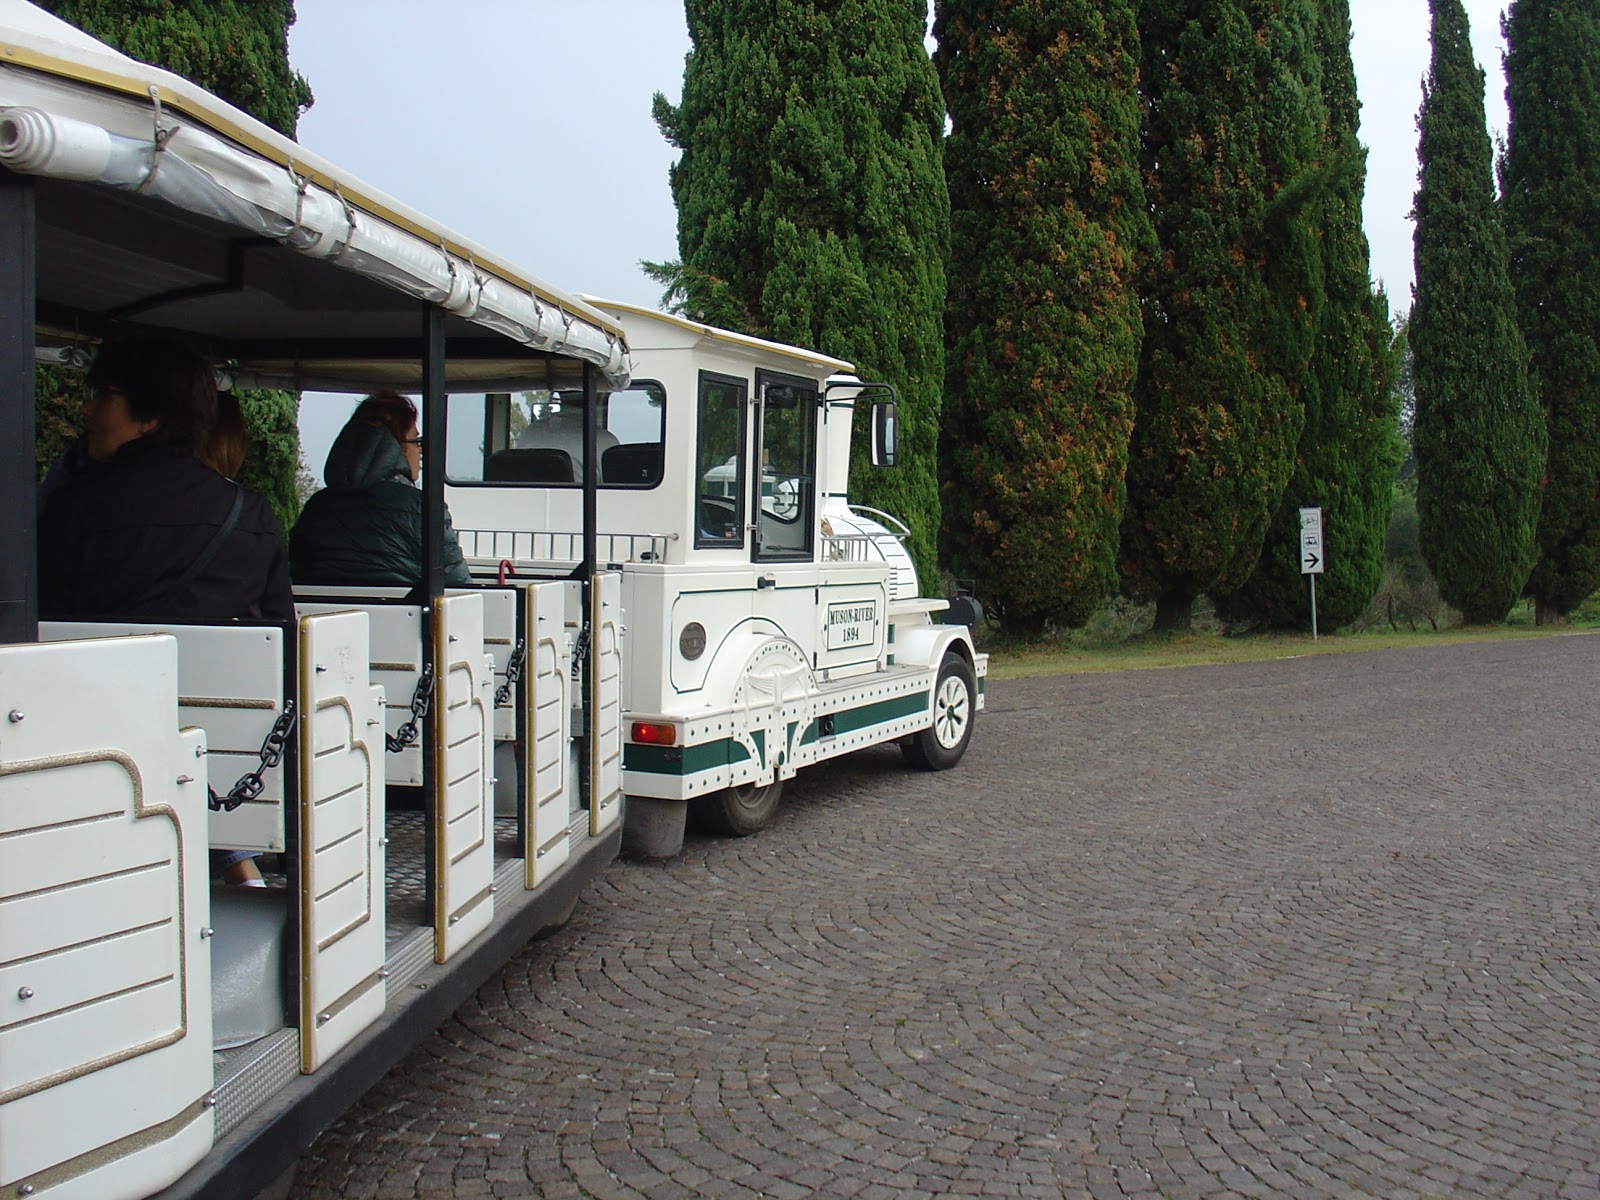 All aboard the Parco Sigurtà Express!